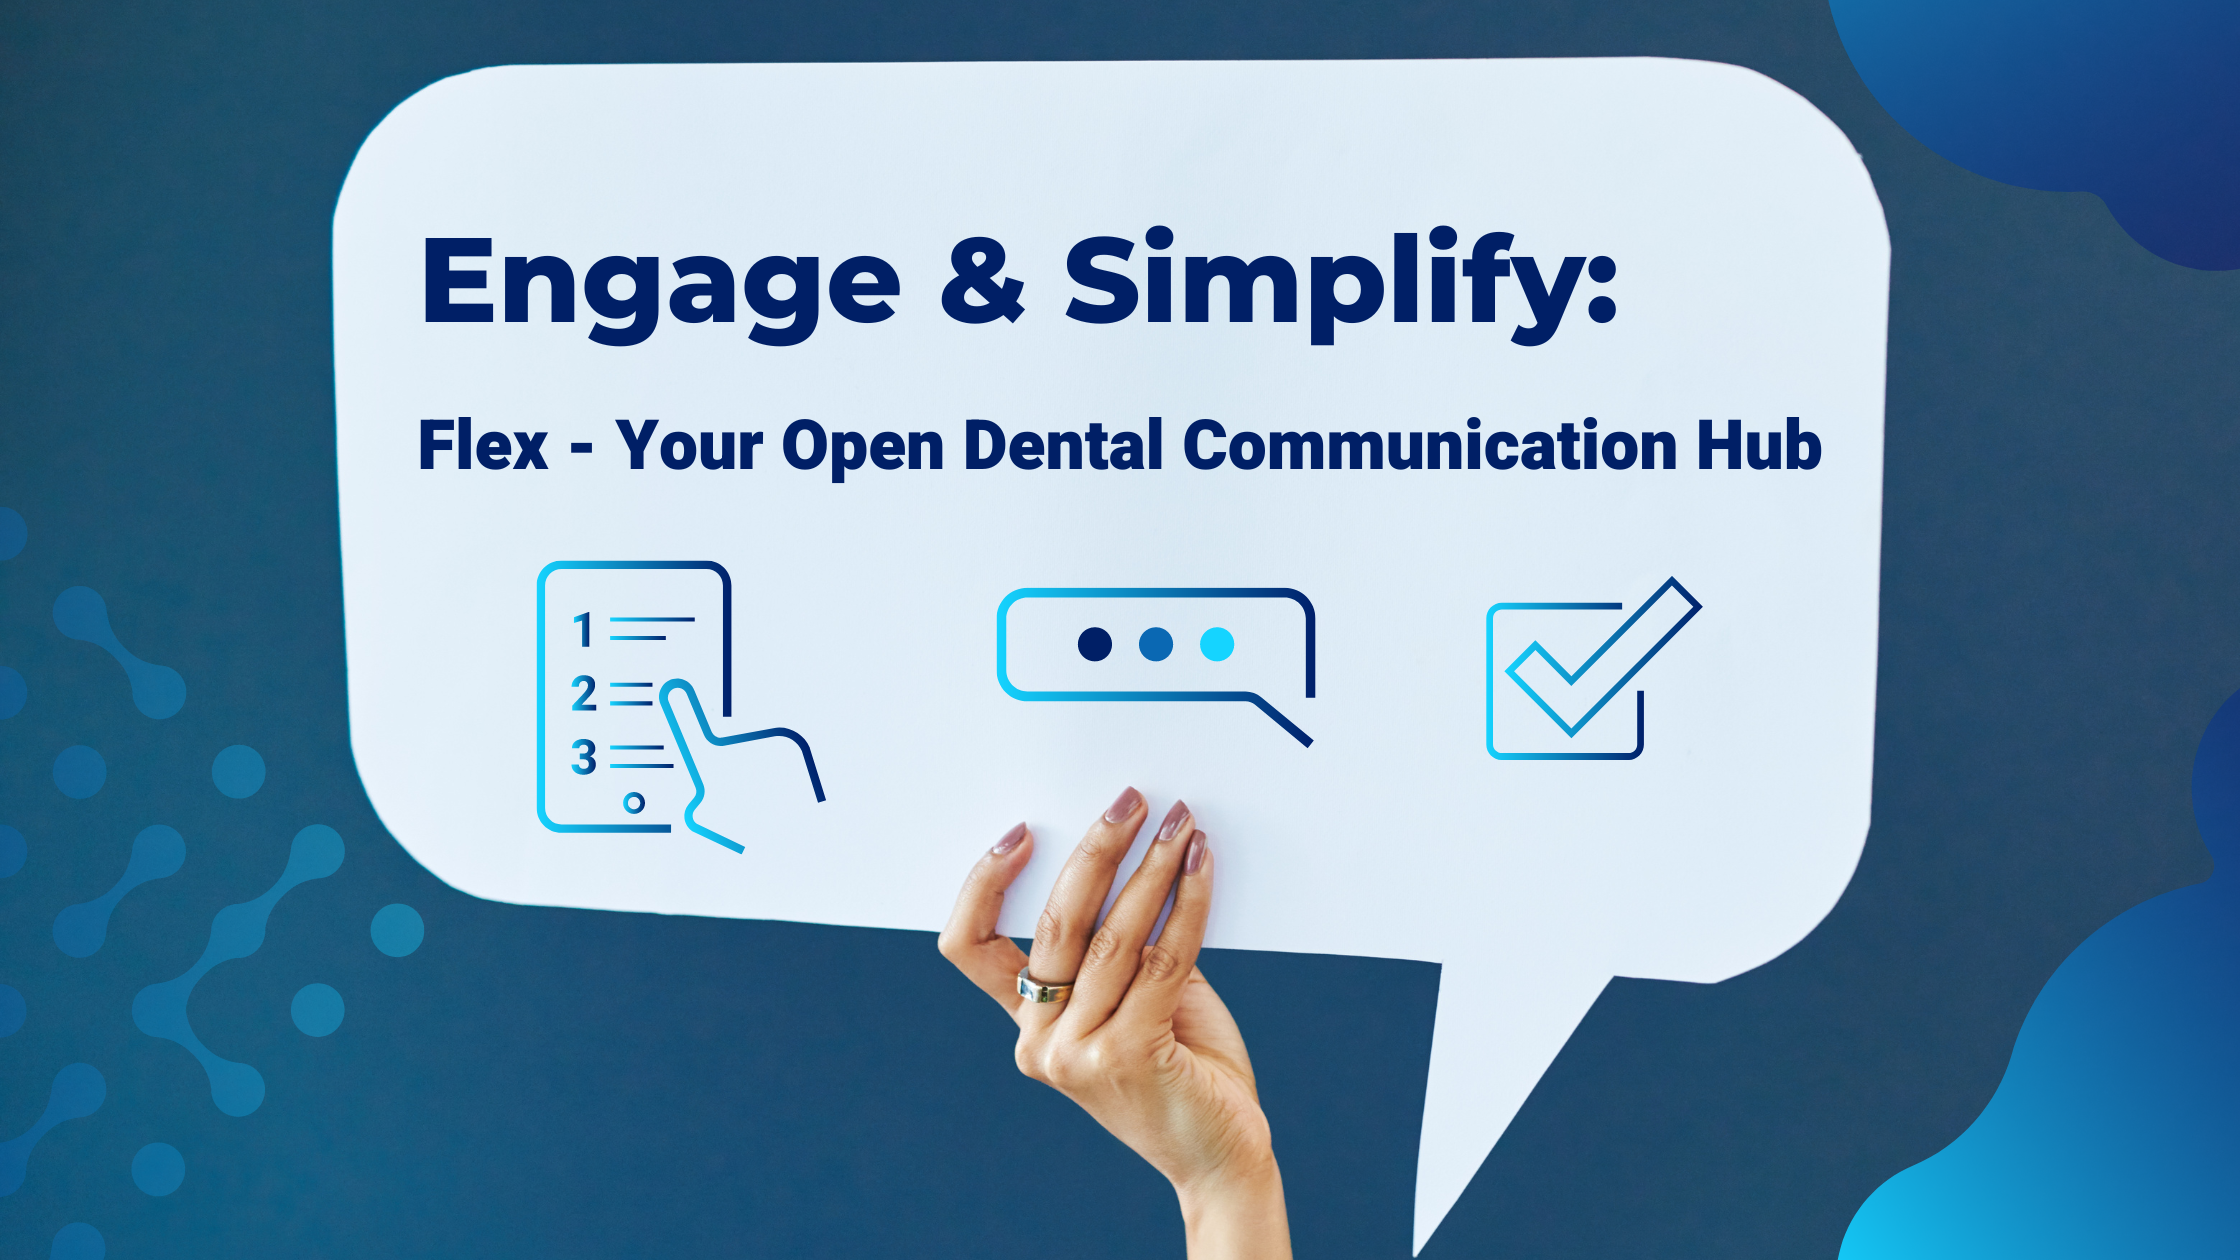 Engage & Simplify: Flex - Your Open Dental Communication Hub